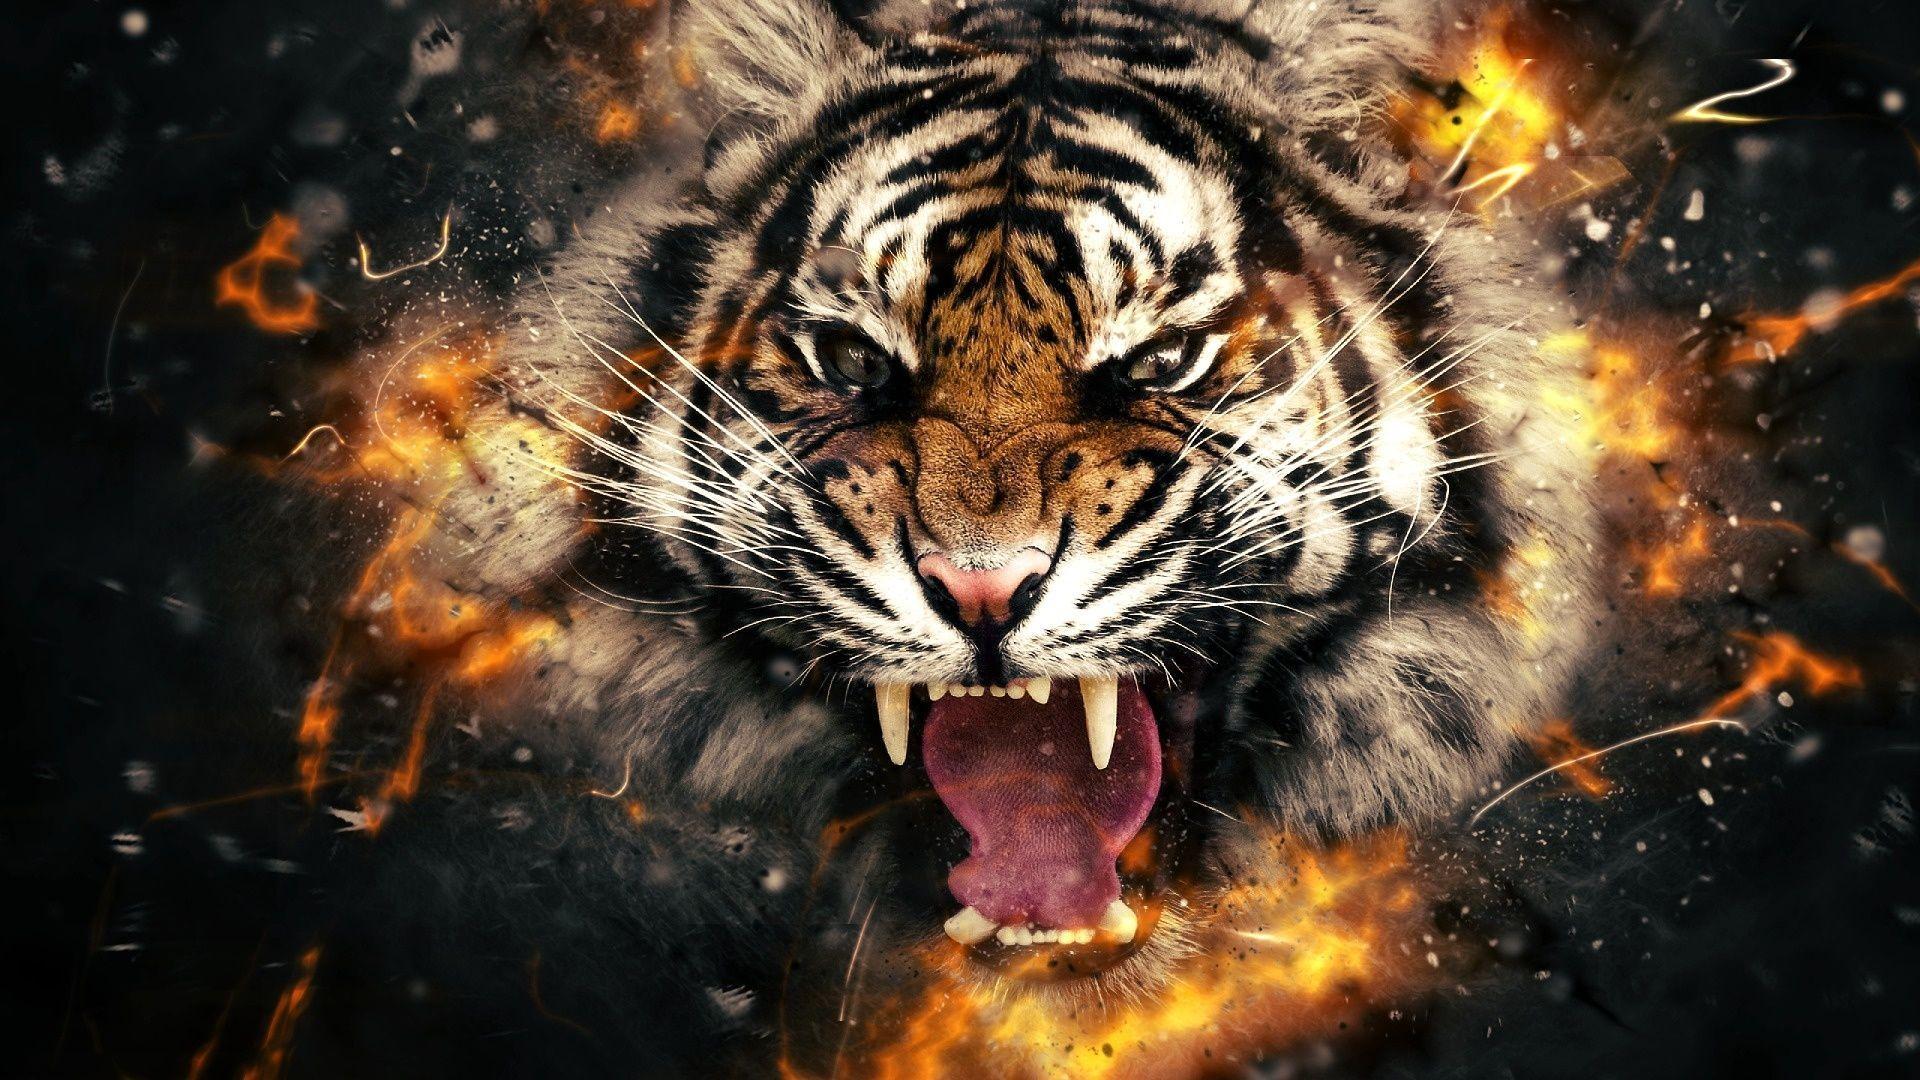 Tiger Roar Wallpapers - Top Free Tiger ...